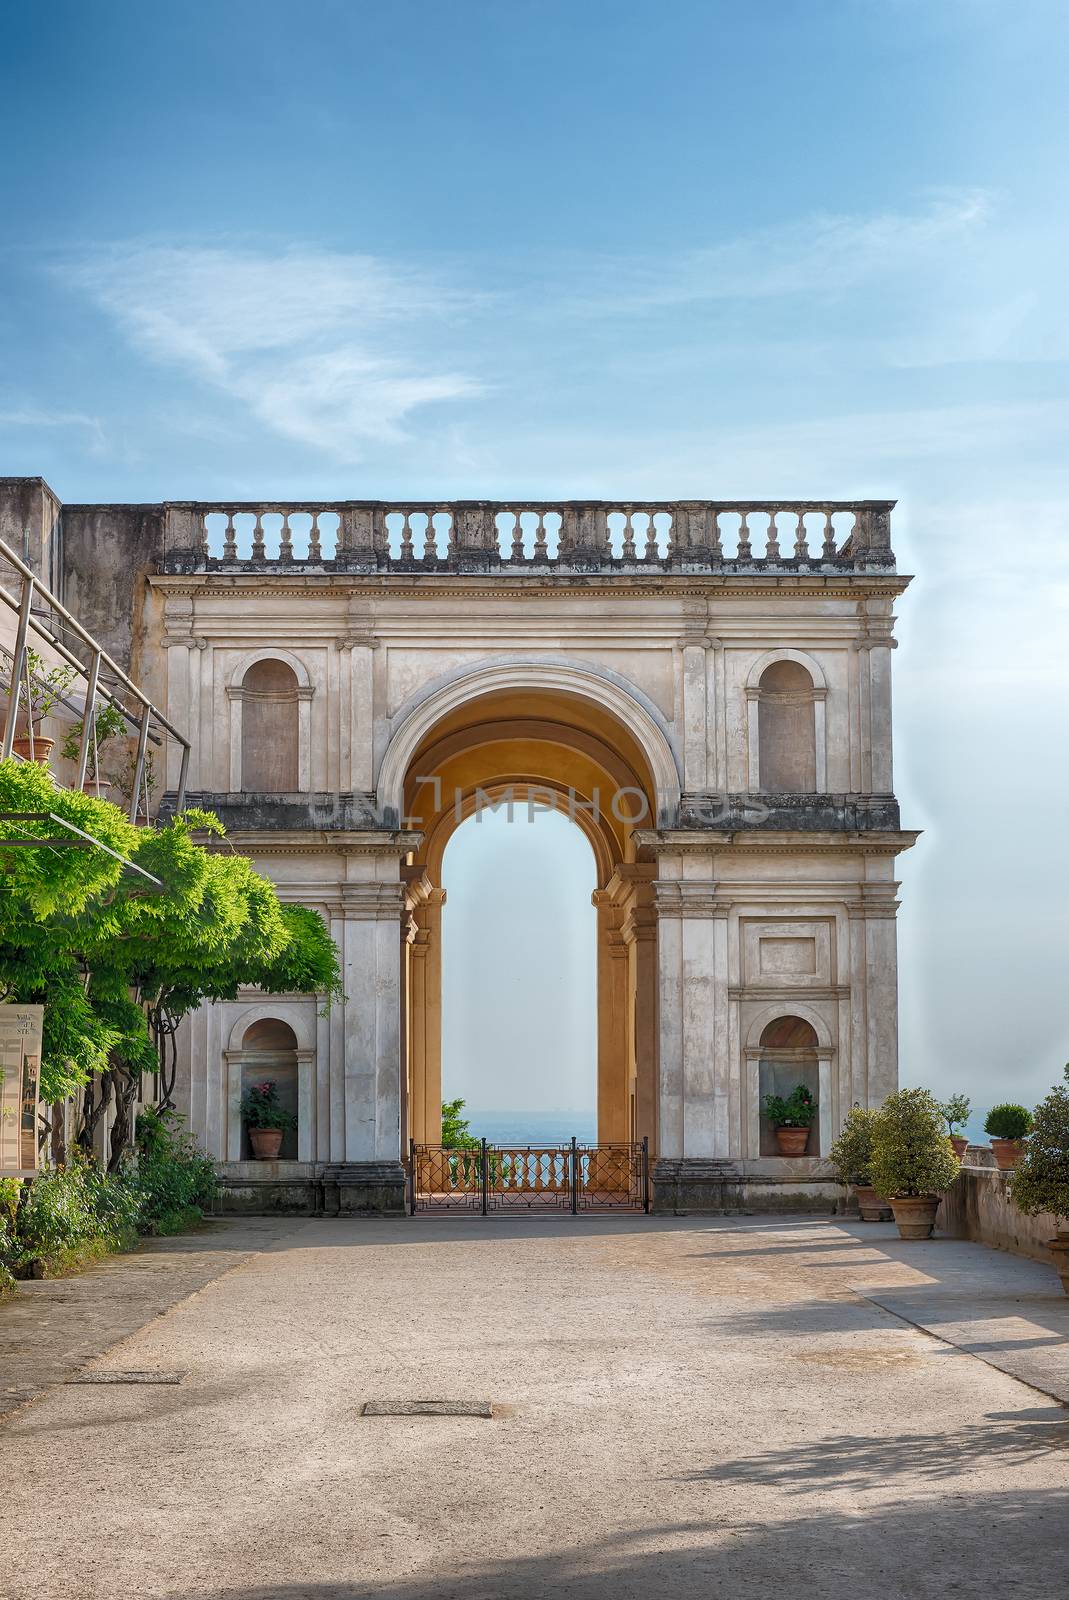 Triumphal Arch inside the iconic Villa d'Este, Tivoli, Italy